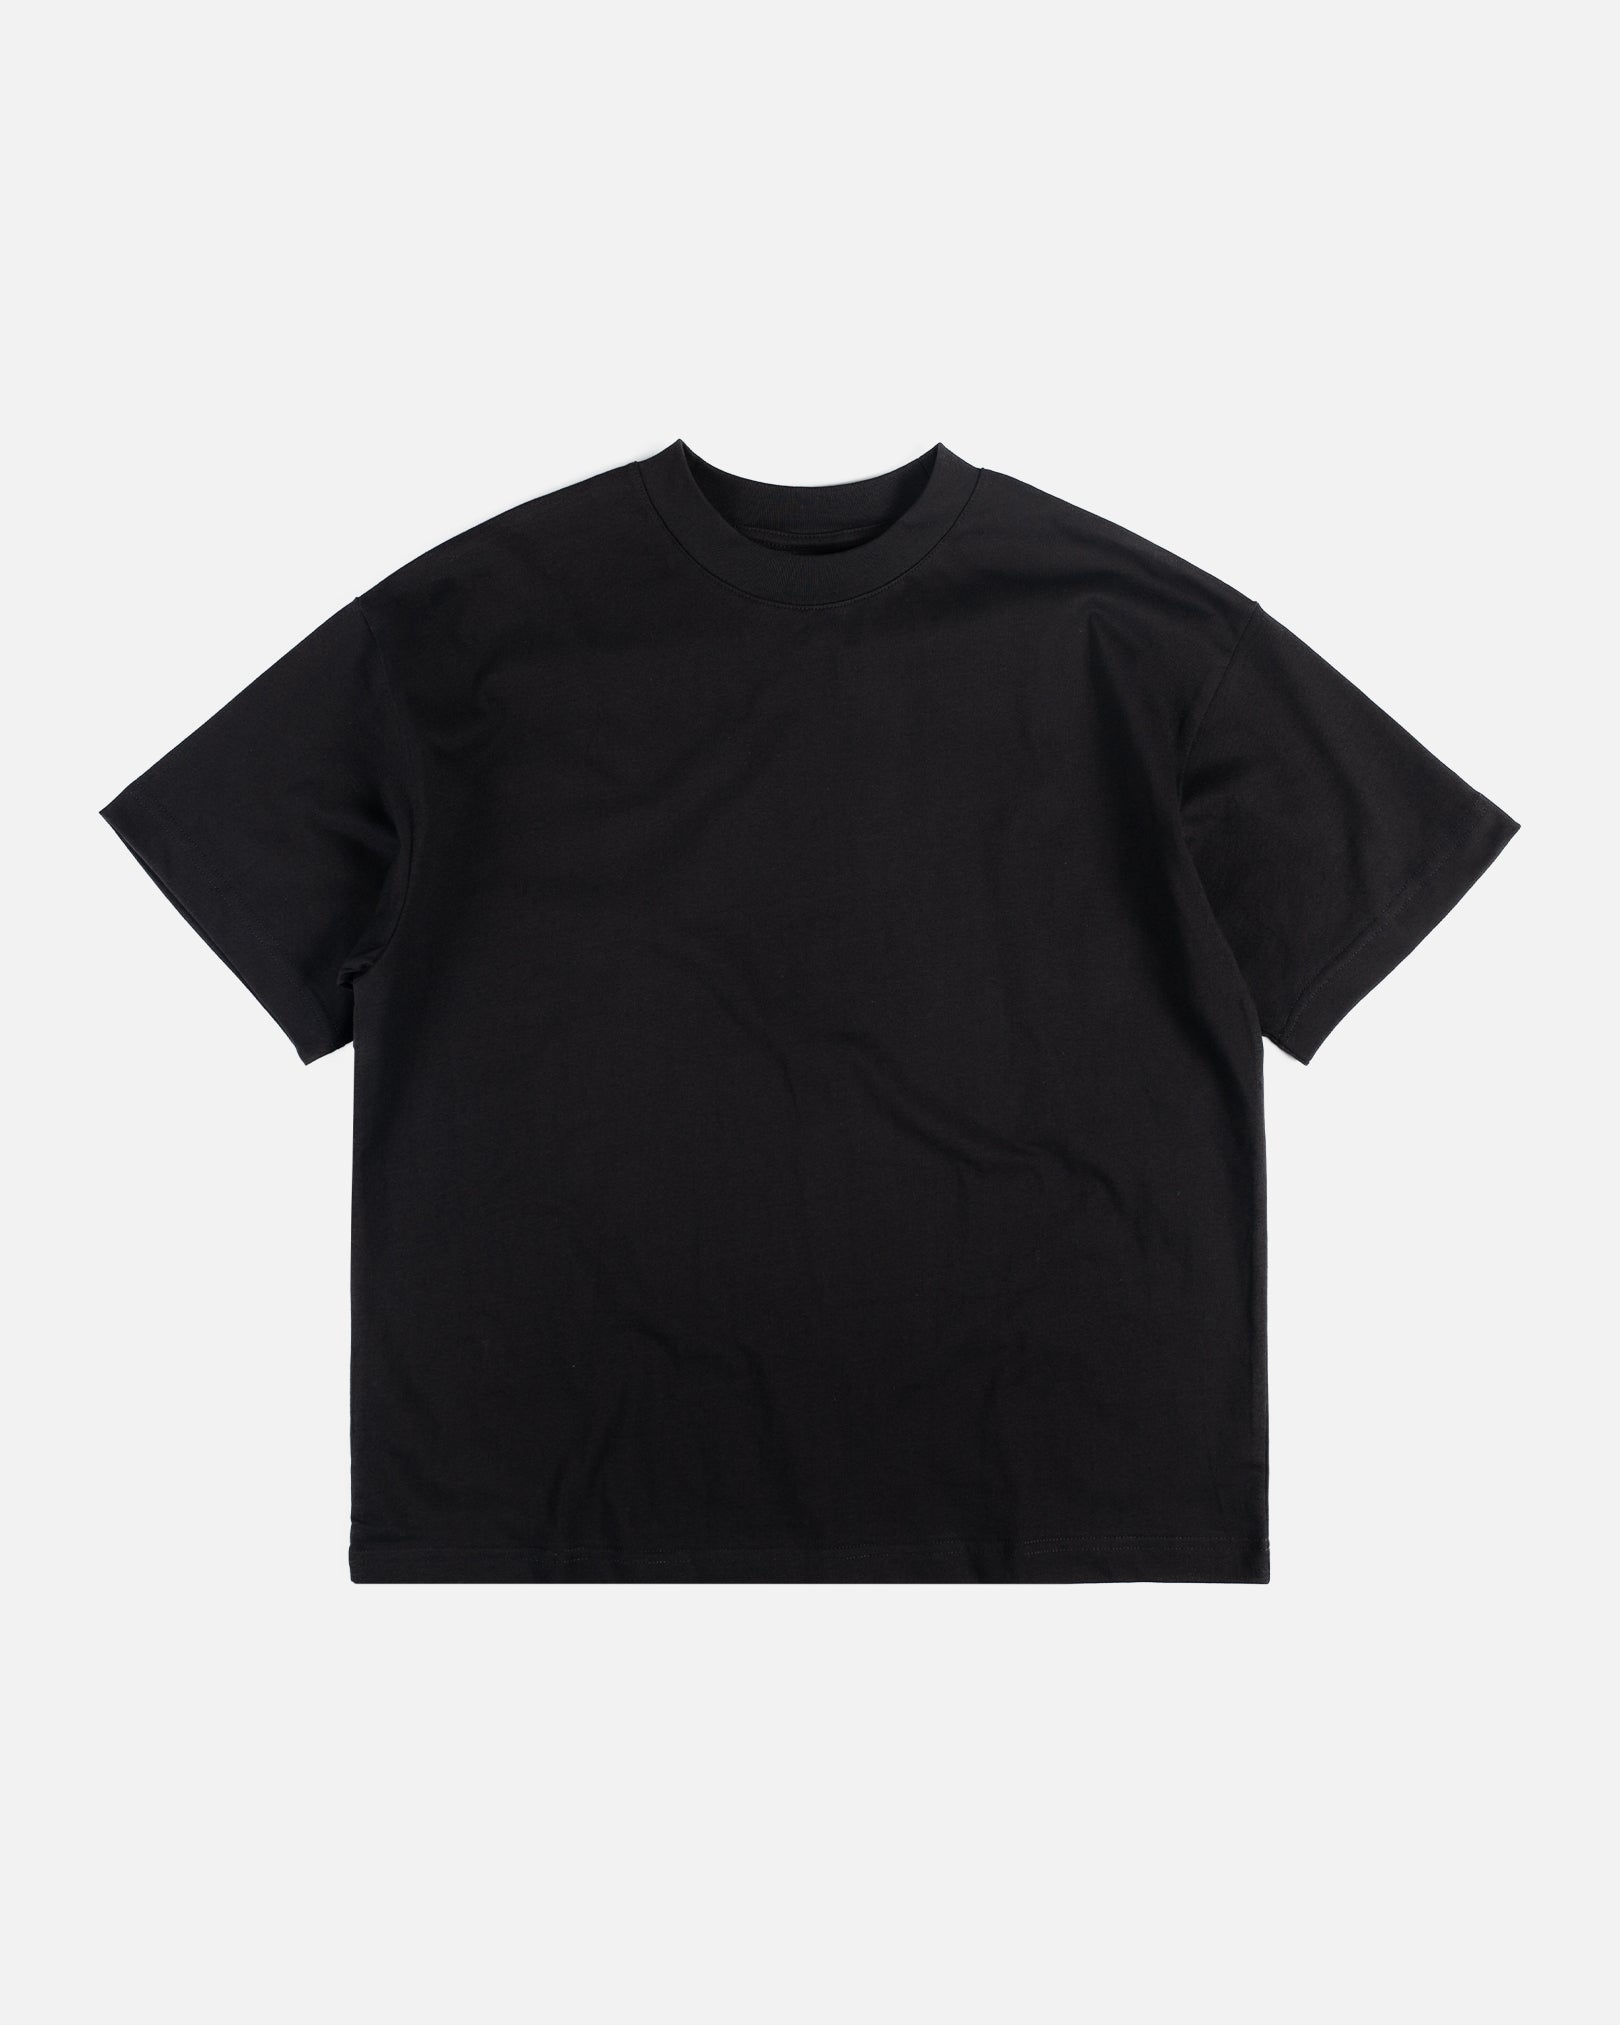 Candice-plain-blank-black-t-shirt